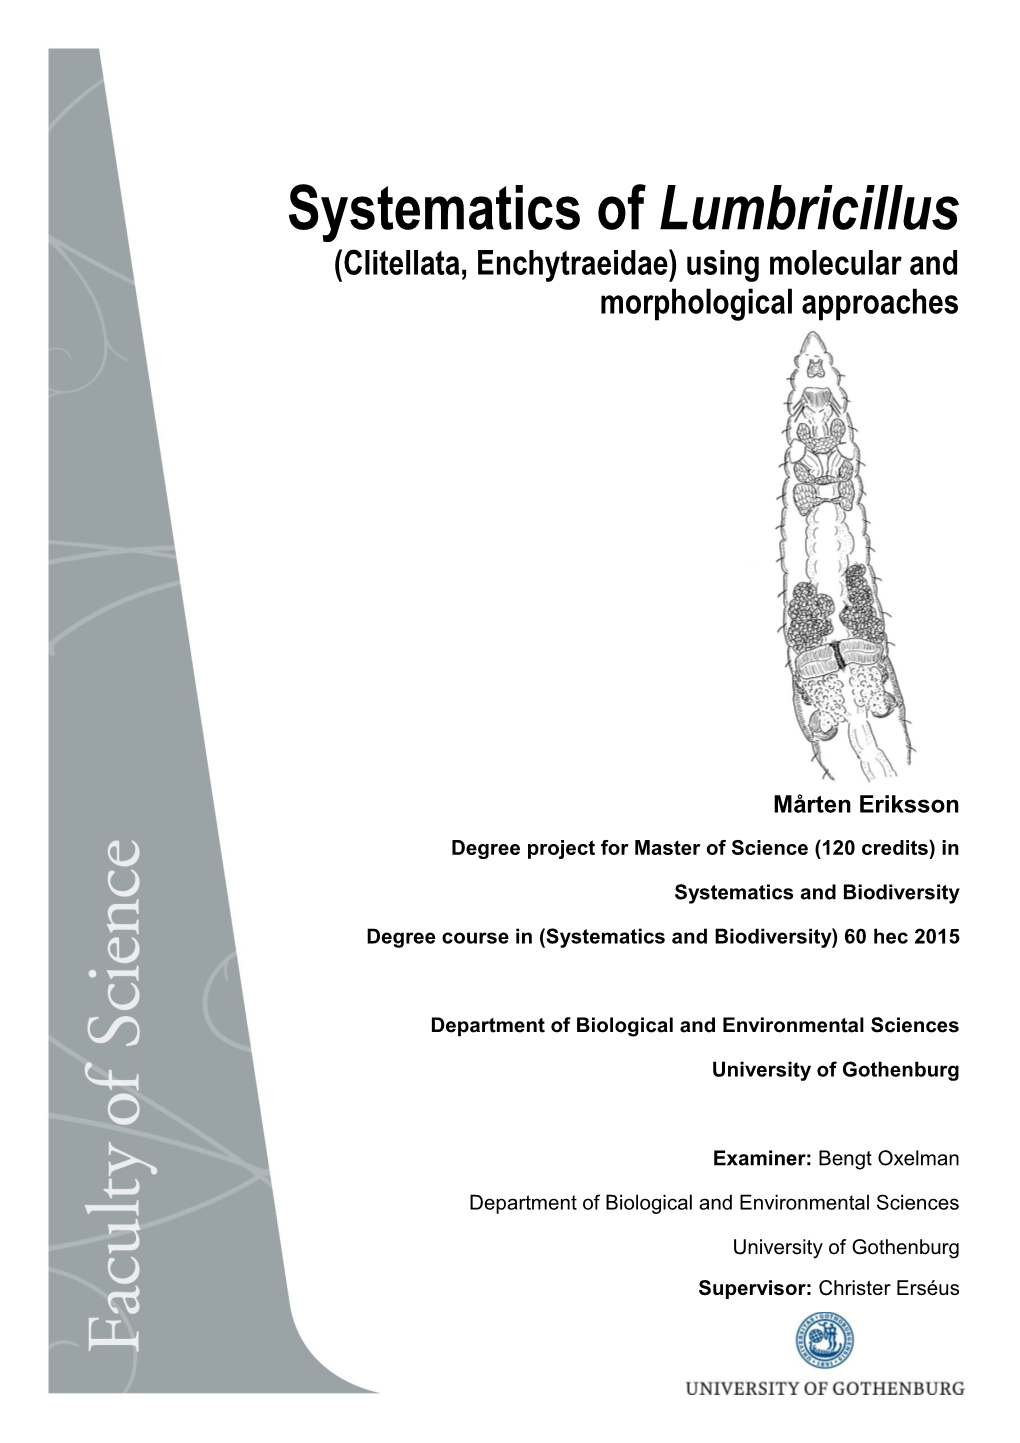 Systematics of Lumbricillus (Clitellata, Enchytraeidae) Using Molecular and Morphological Approaches